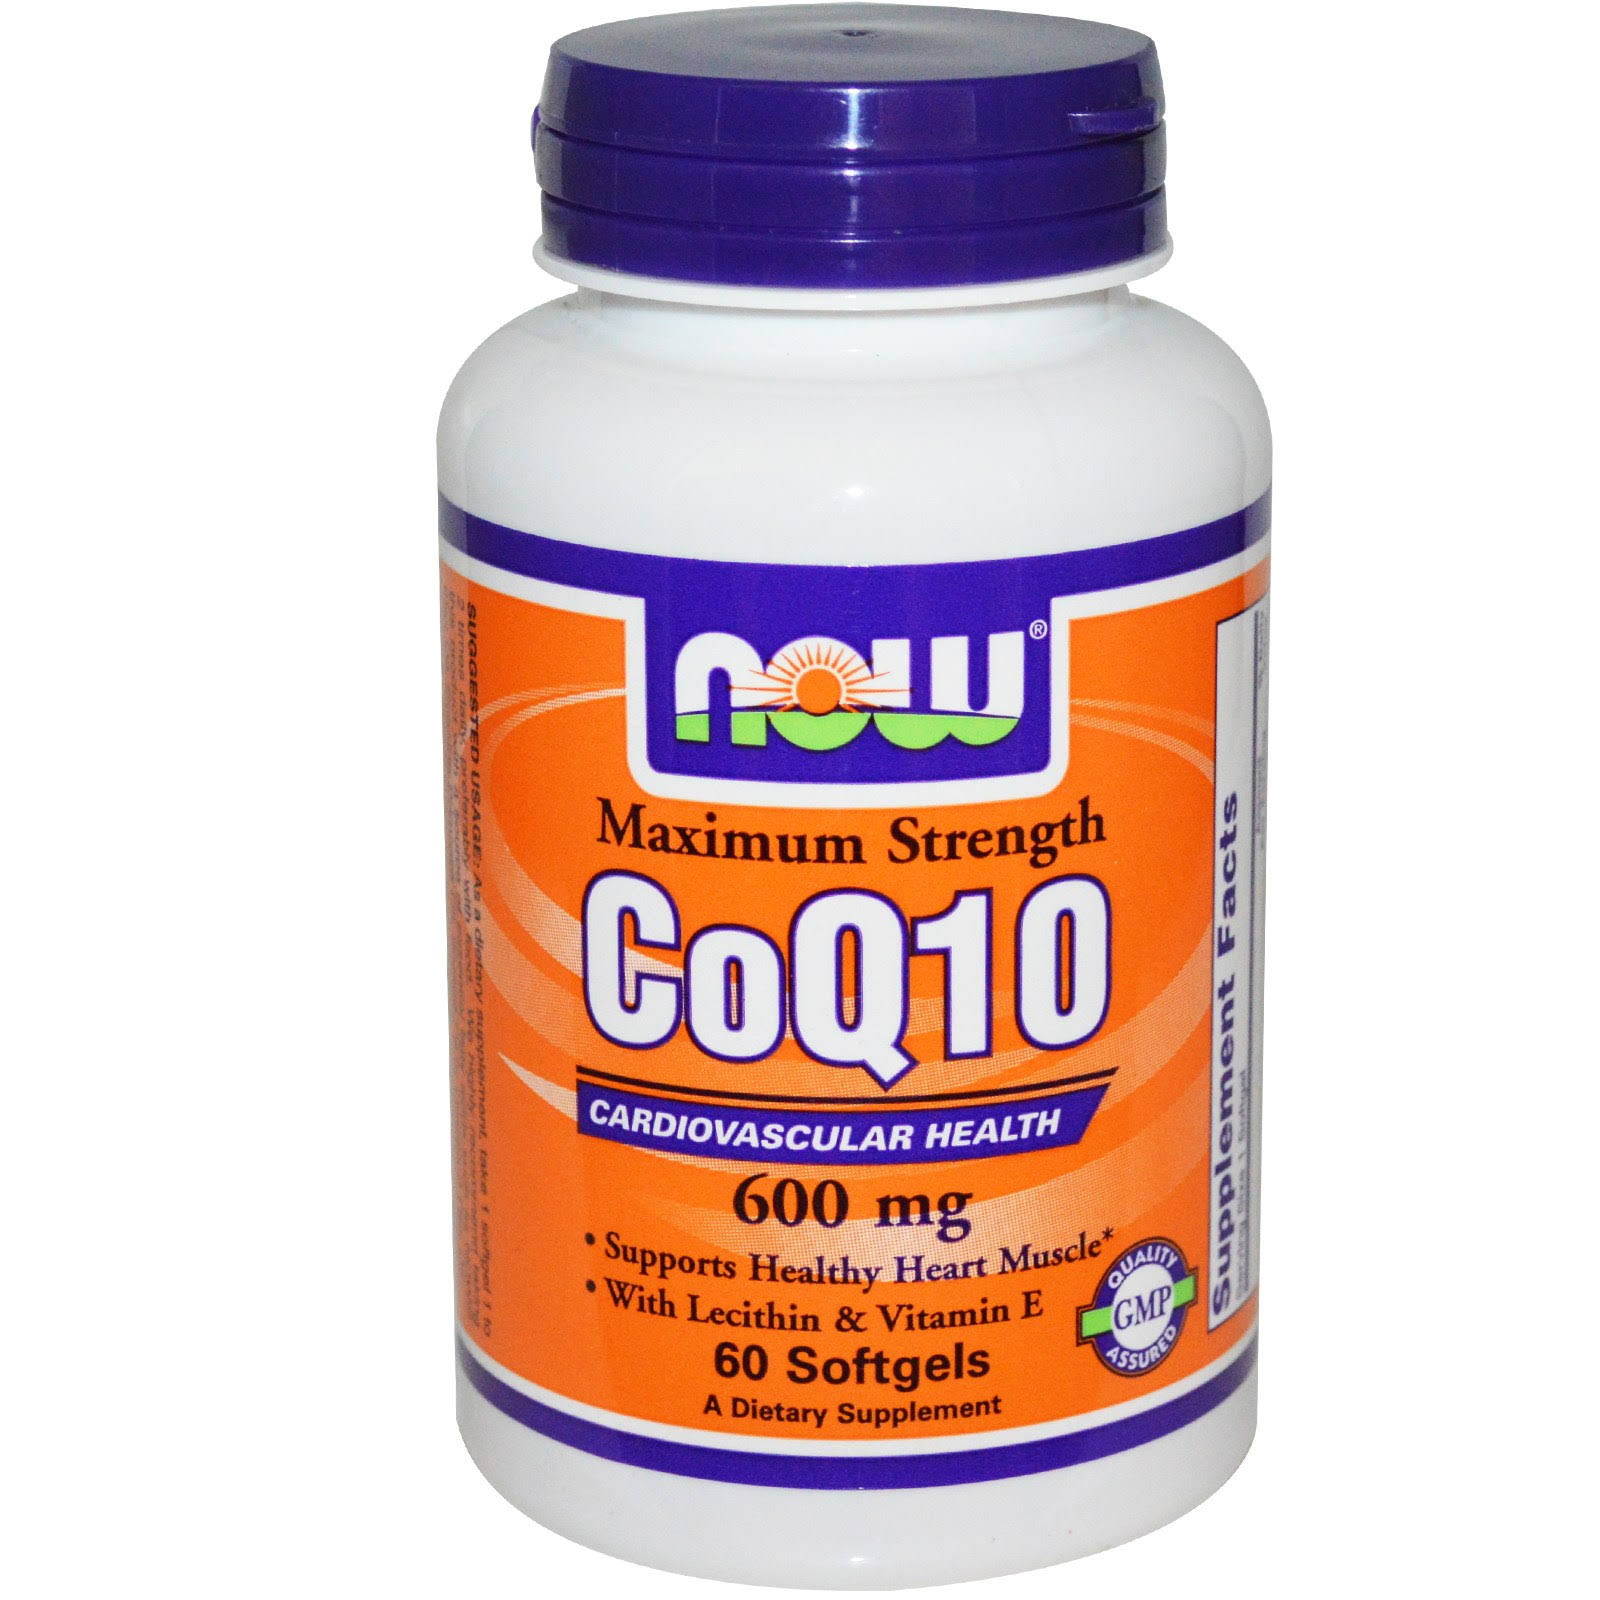 Now Foods CoQ-10 Supplement - 600mg, 60ct